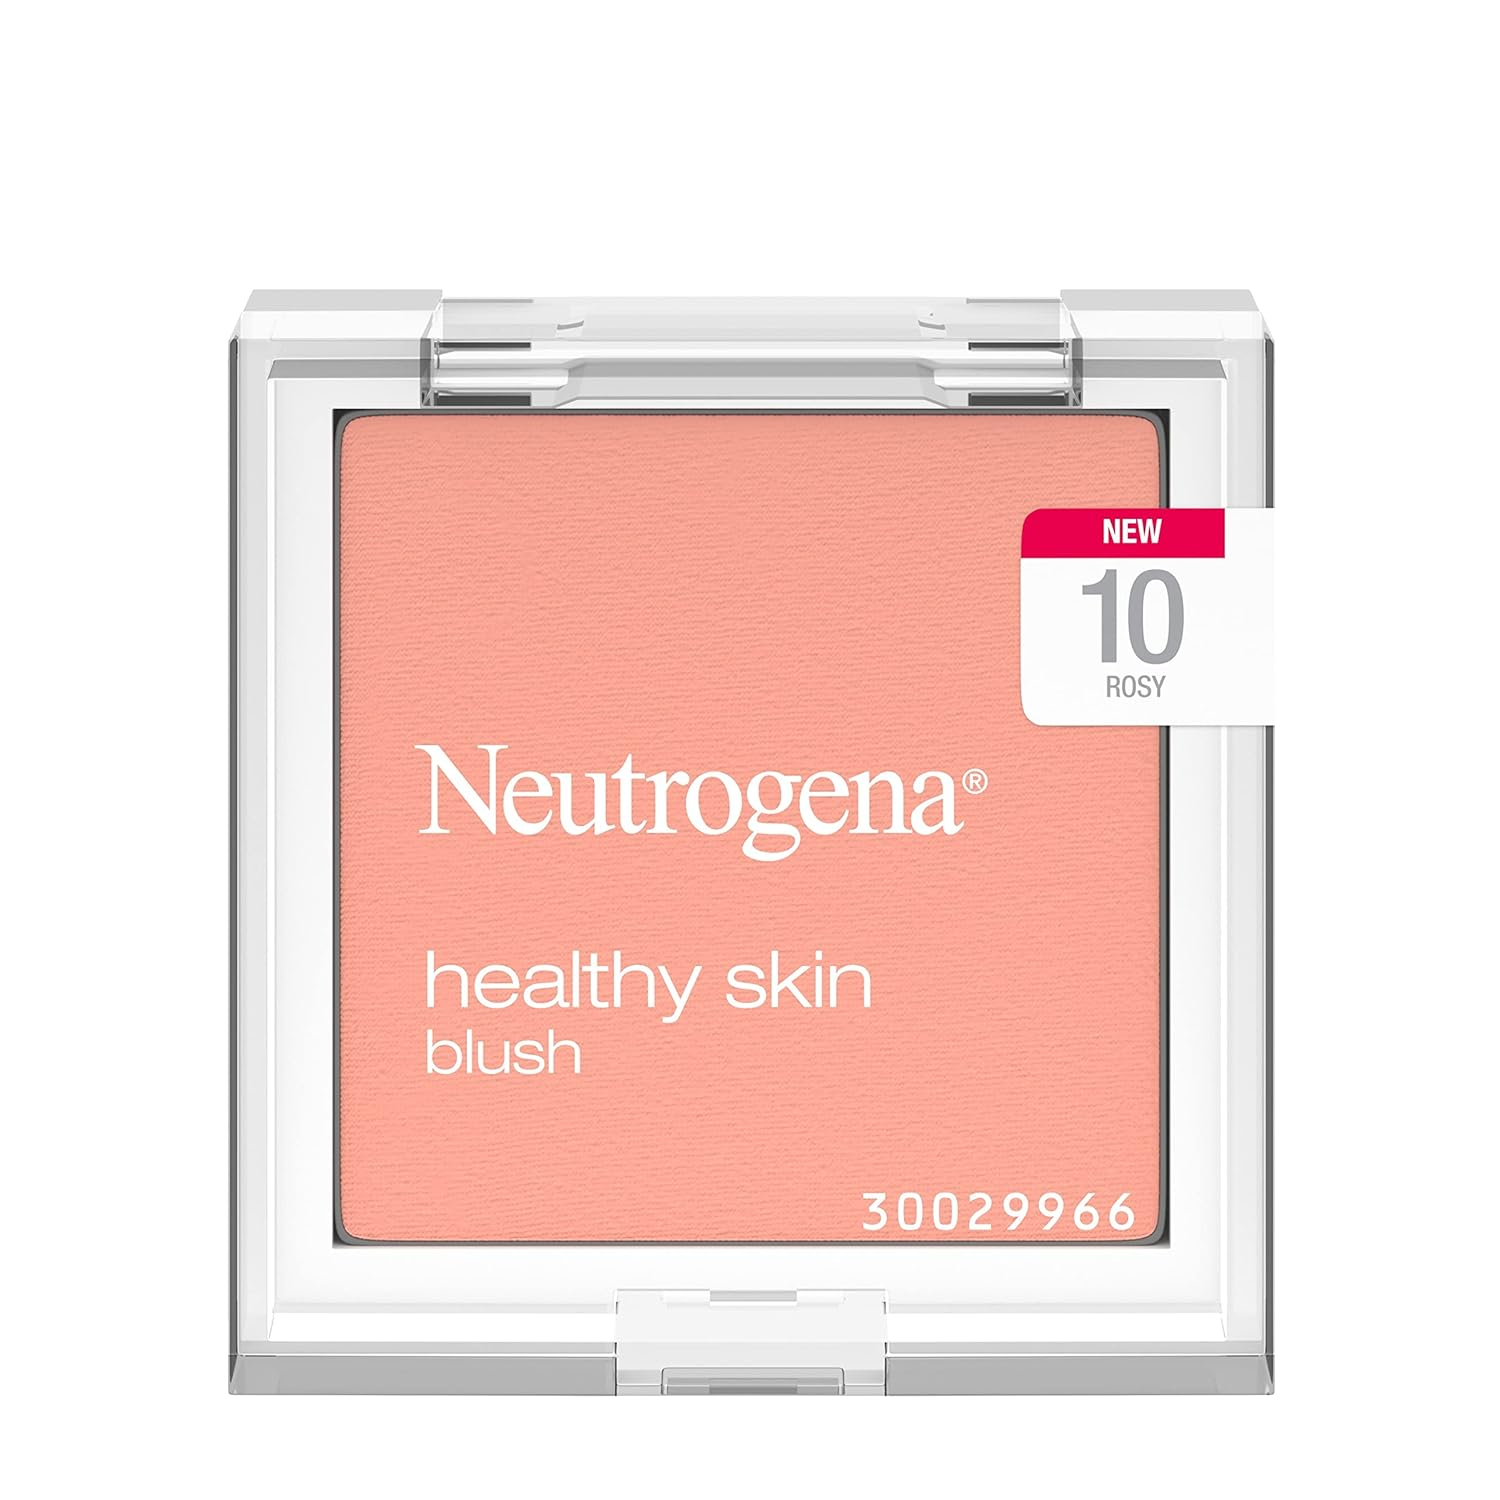 Neutrogena Healthy Skin Powder Blush Price